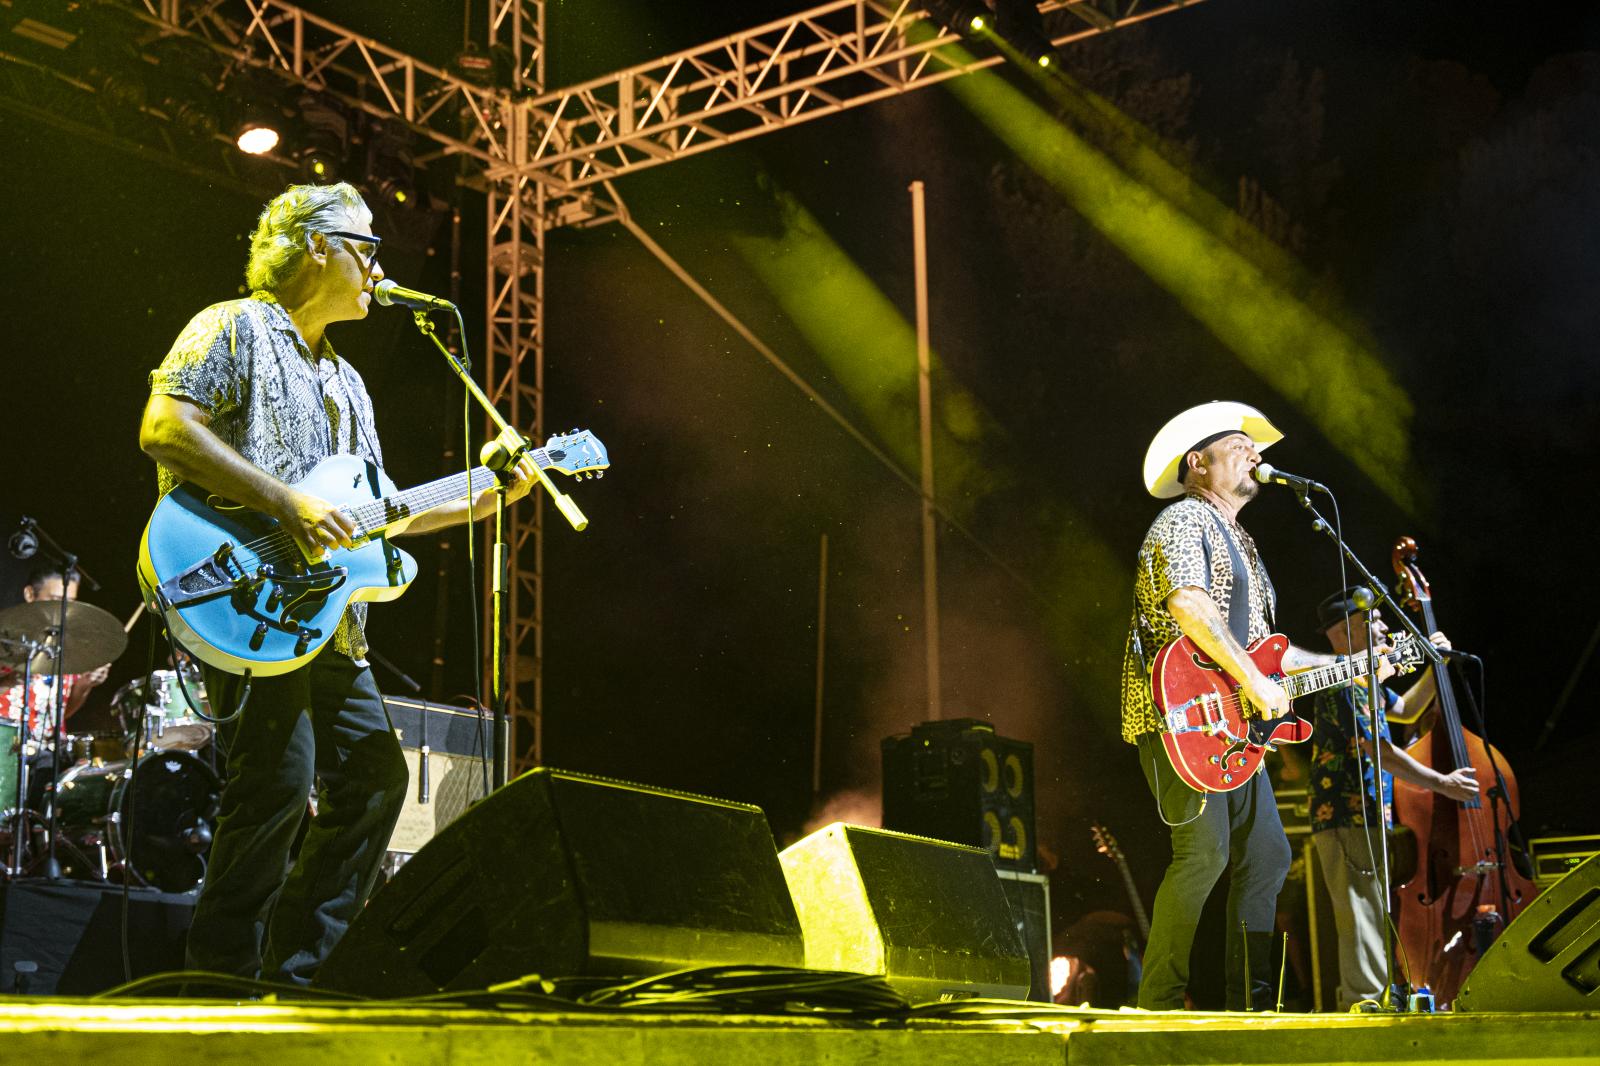 Image from Daily News - Los Rebeldes give a concert during les Festes de la...